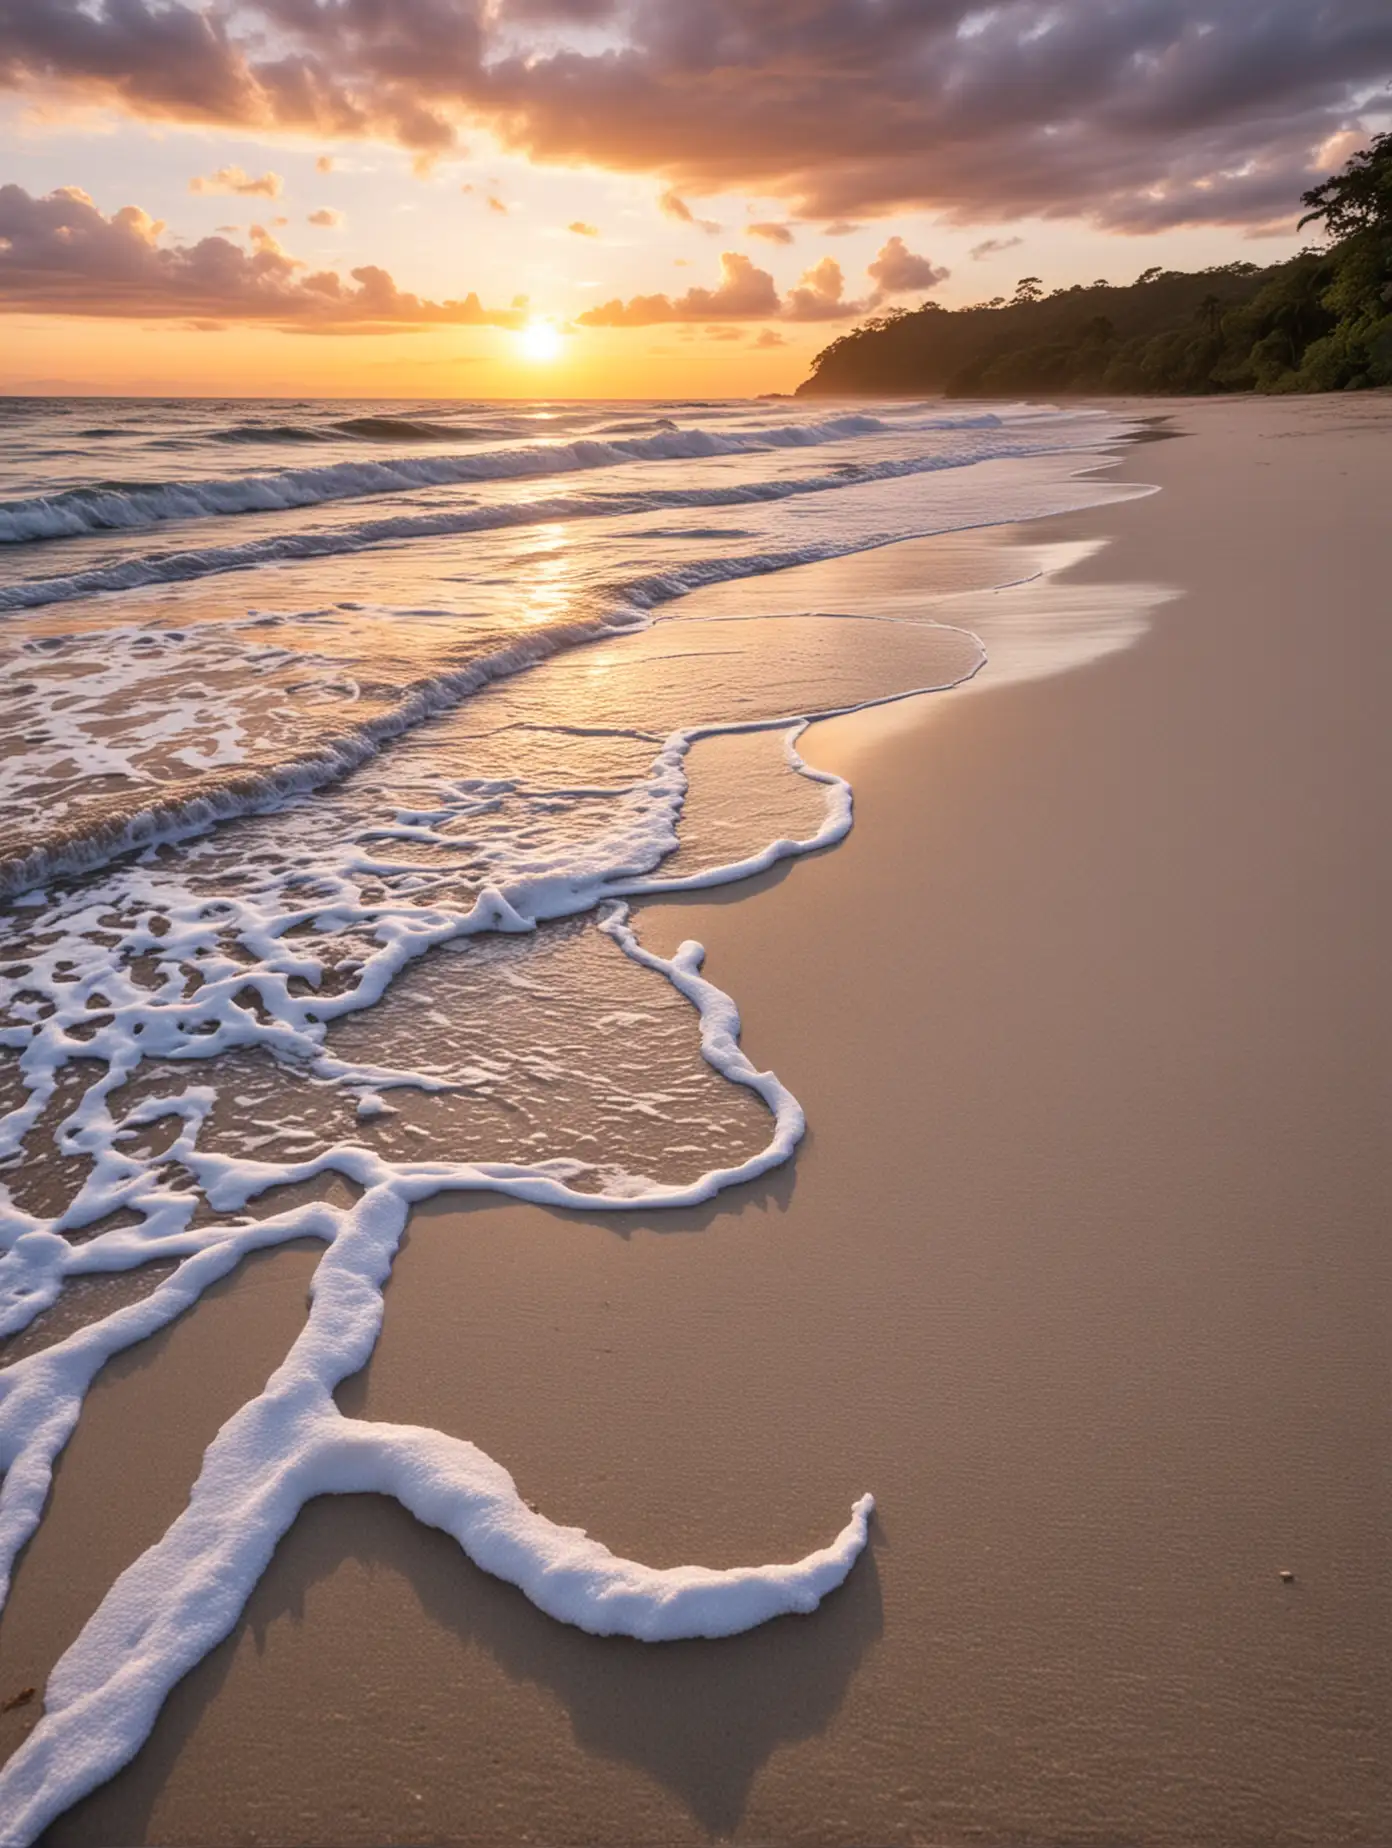 Tranquil Sunset on Costa Ricas White Sandy Beach